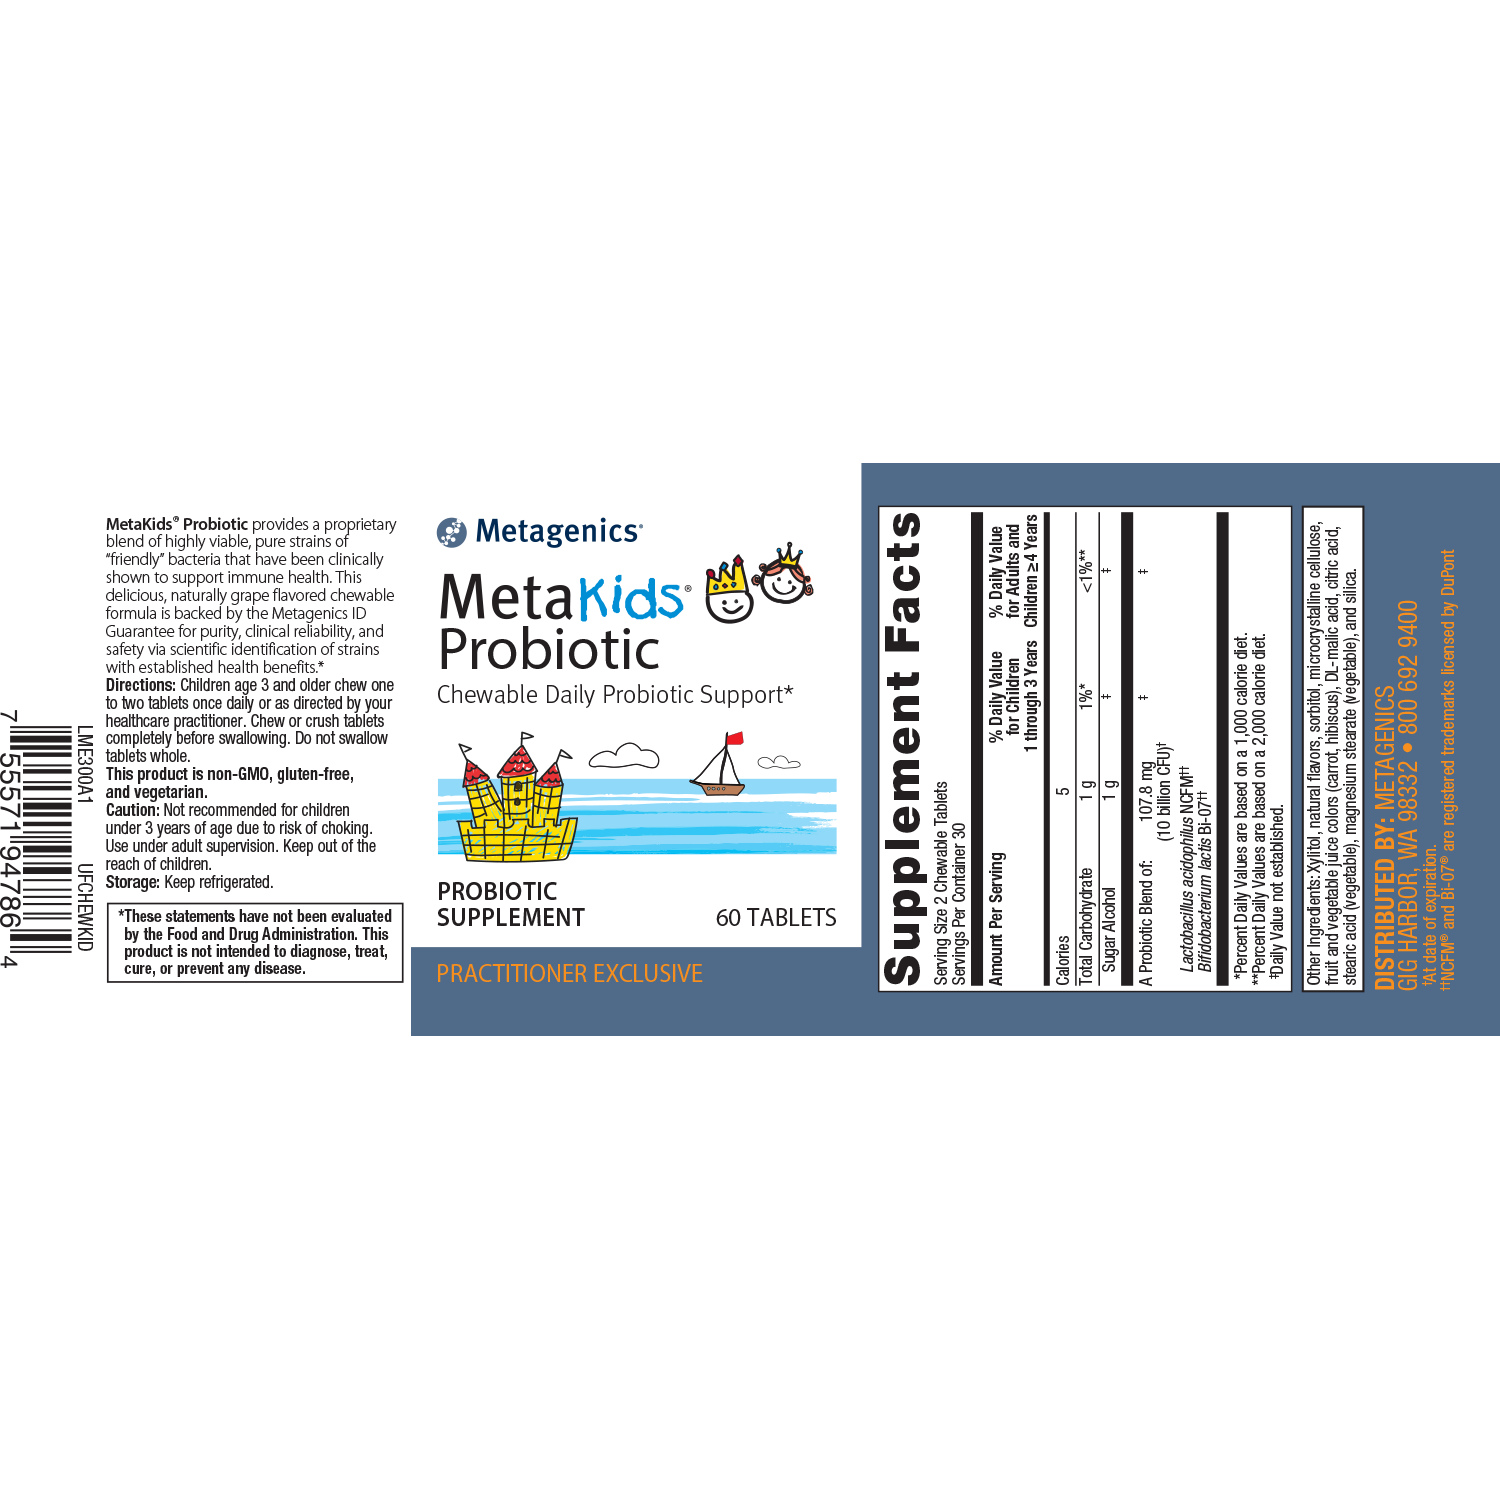 Metagenics Metakids Probiotic